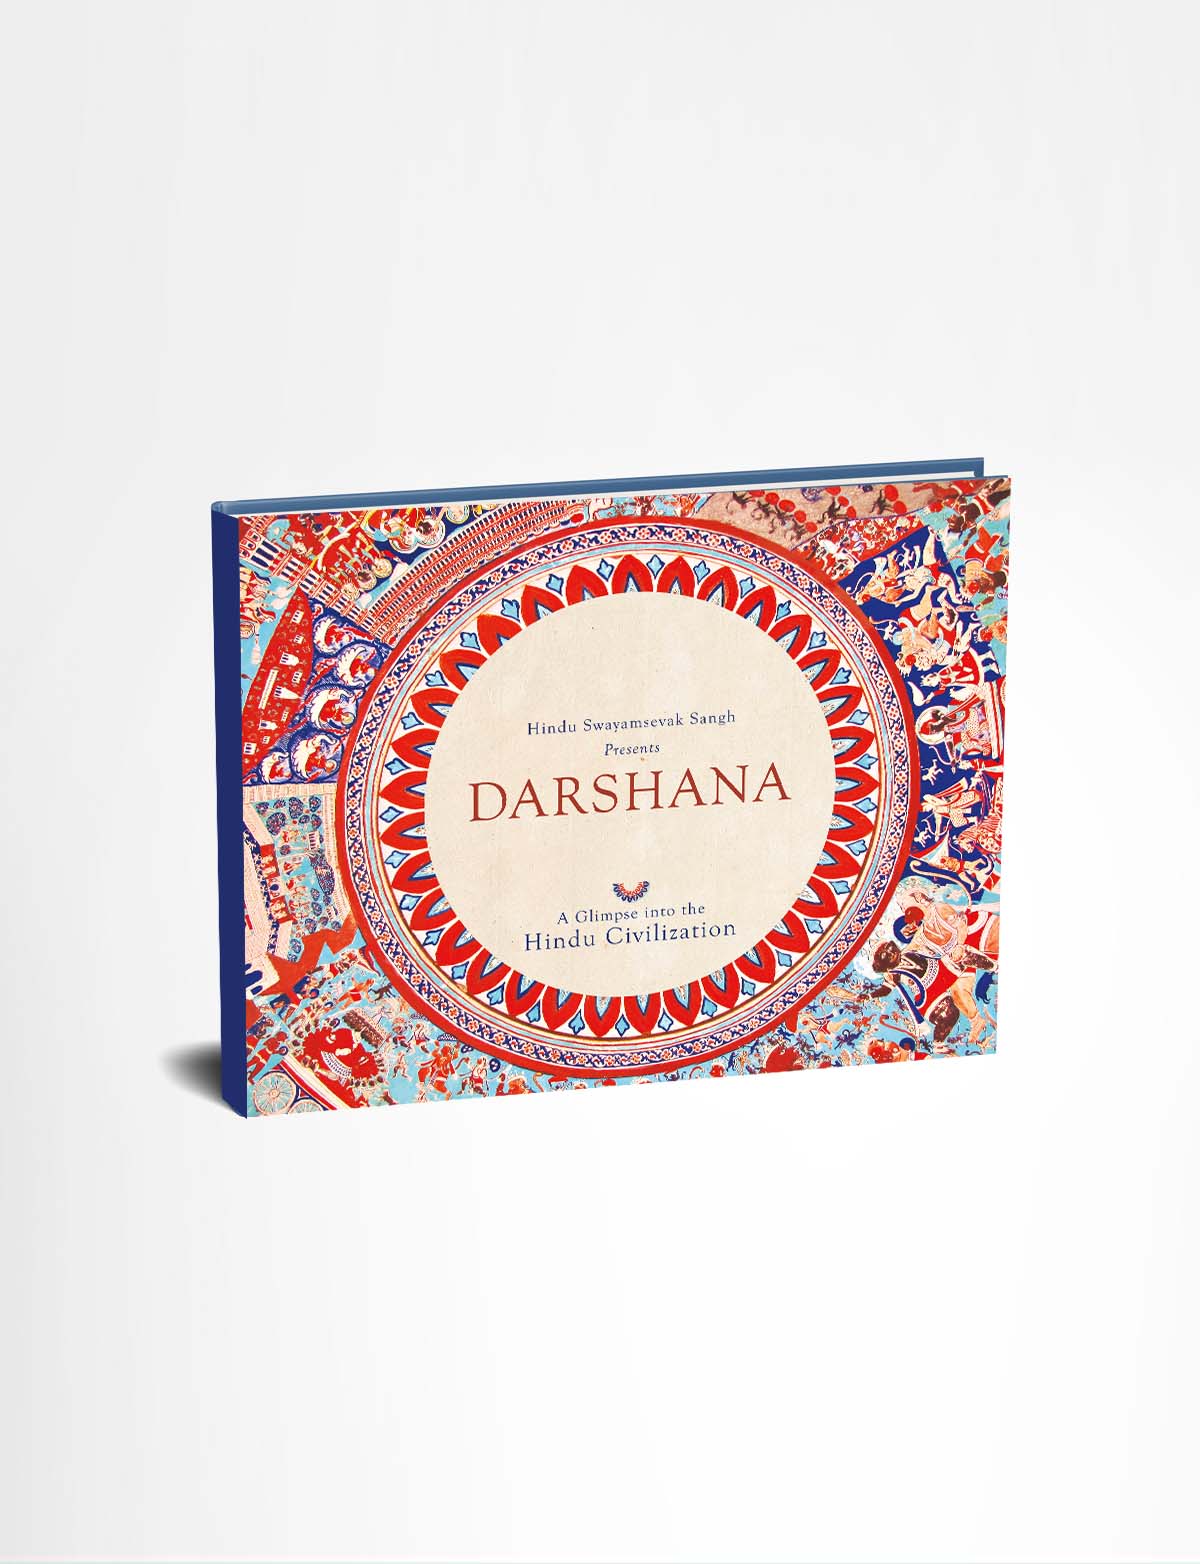 Darshana - A Glimpse into the Hindu Civilization